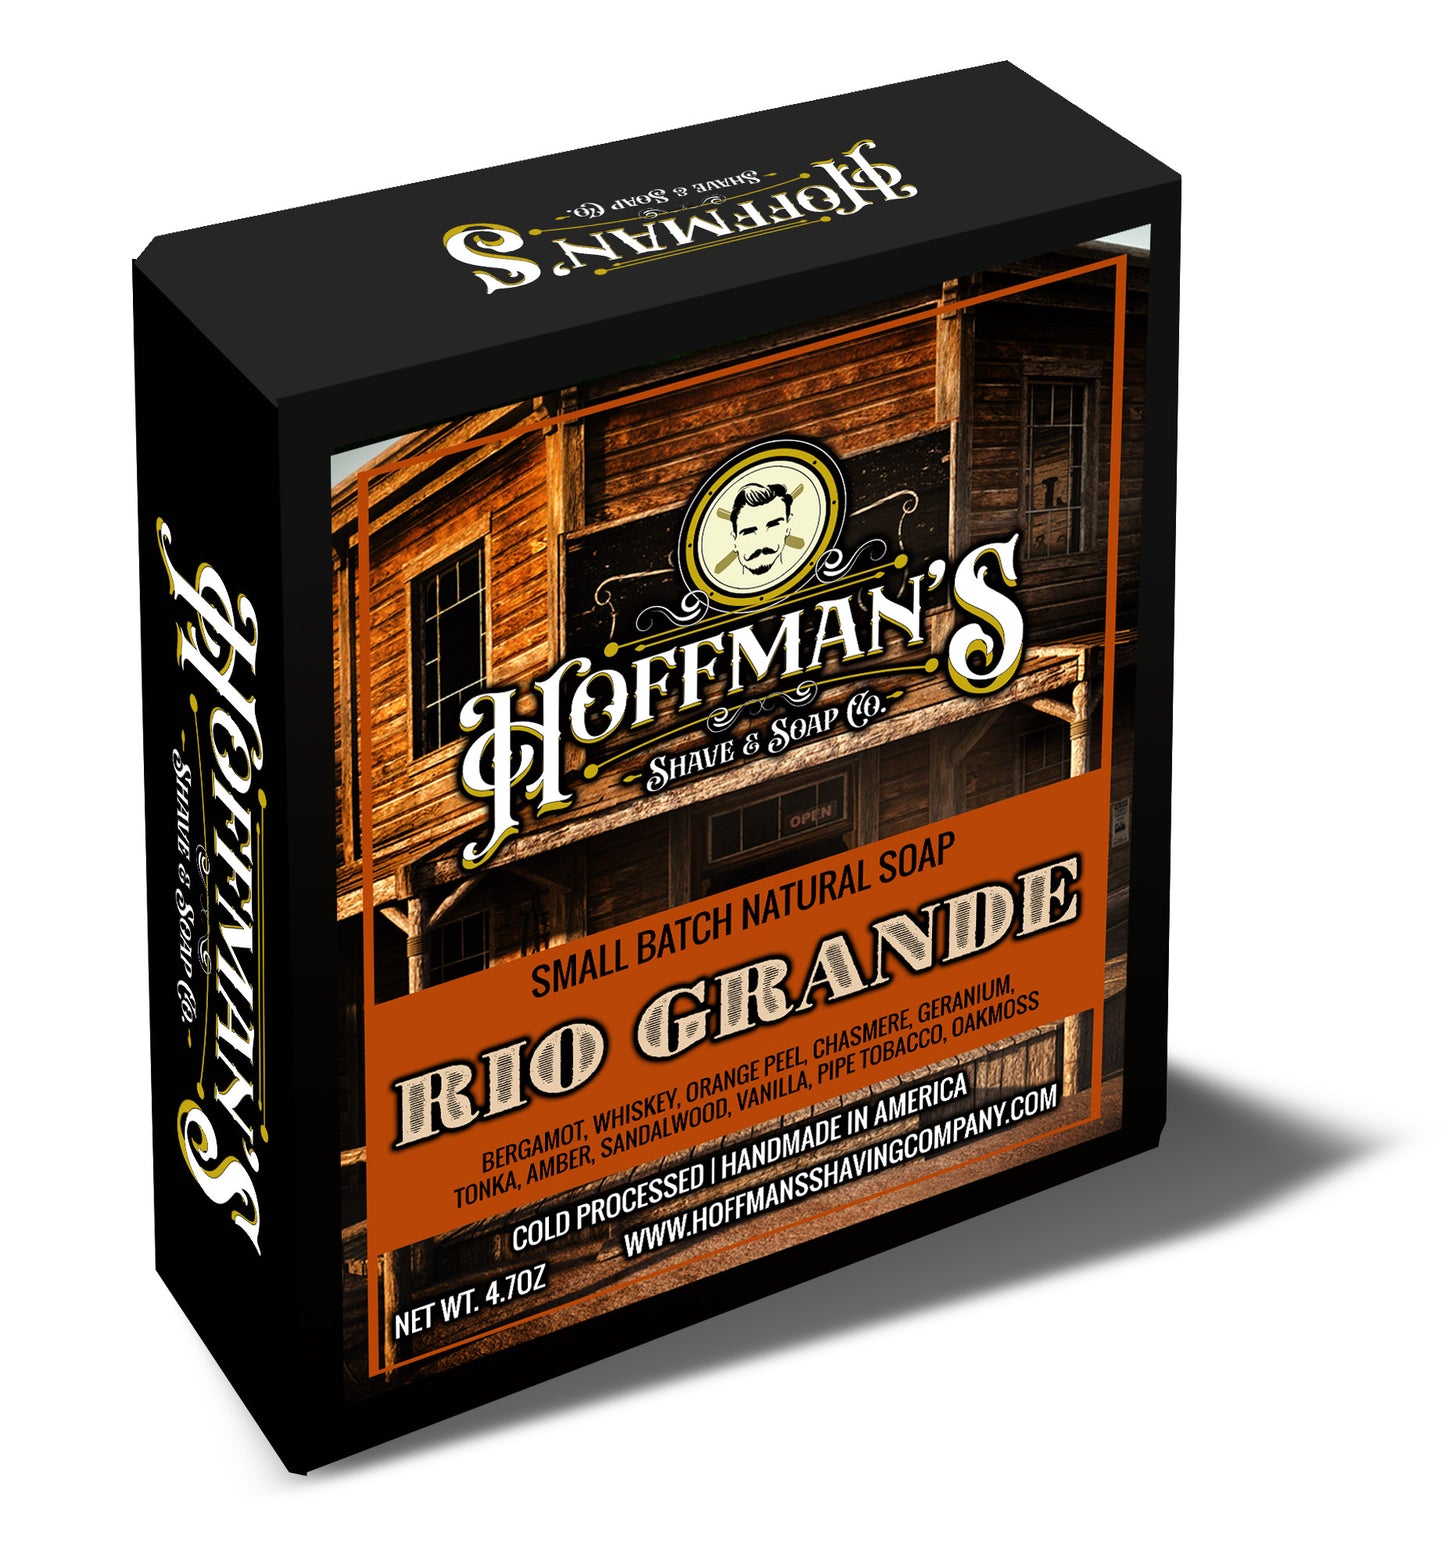 Rio Grande (Whiskey, Amber, Tonka, Geranium) Bar Soap